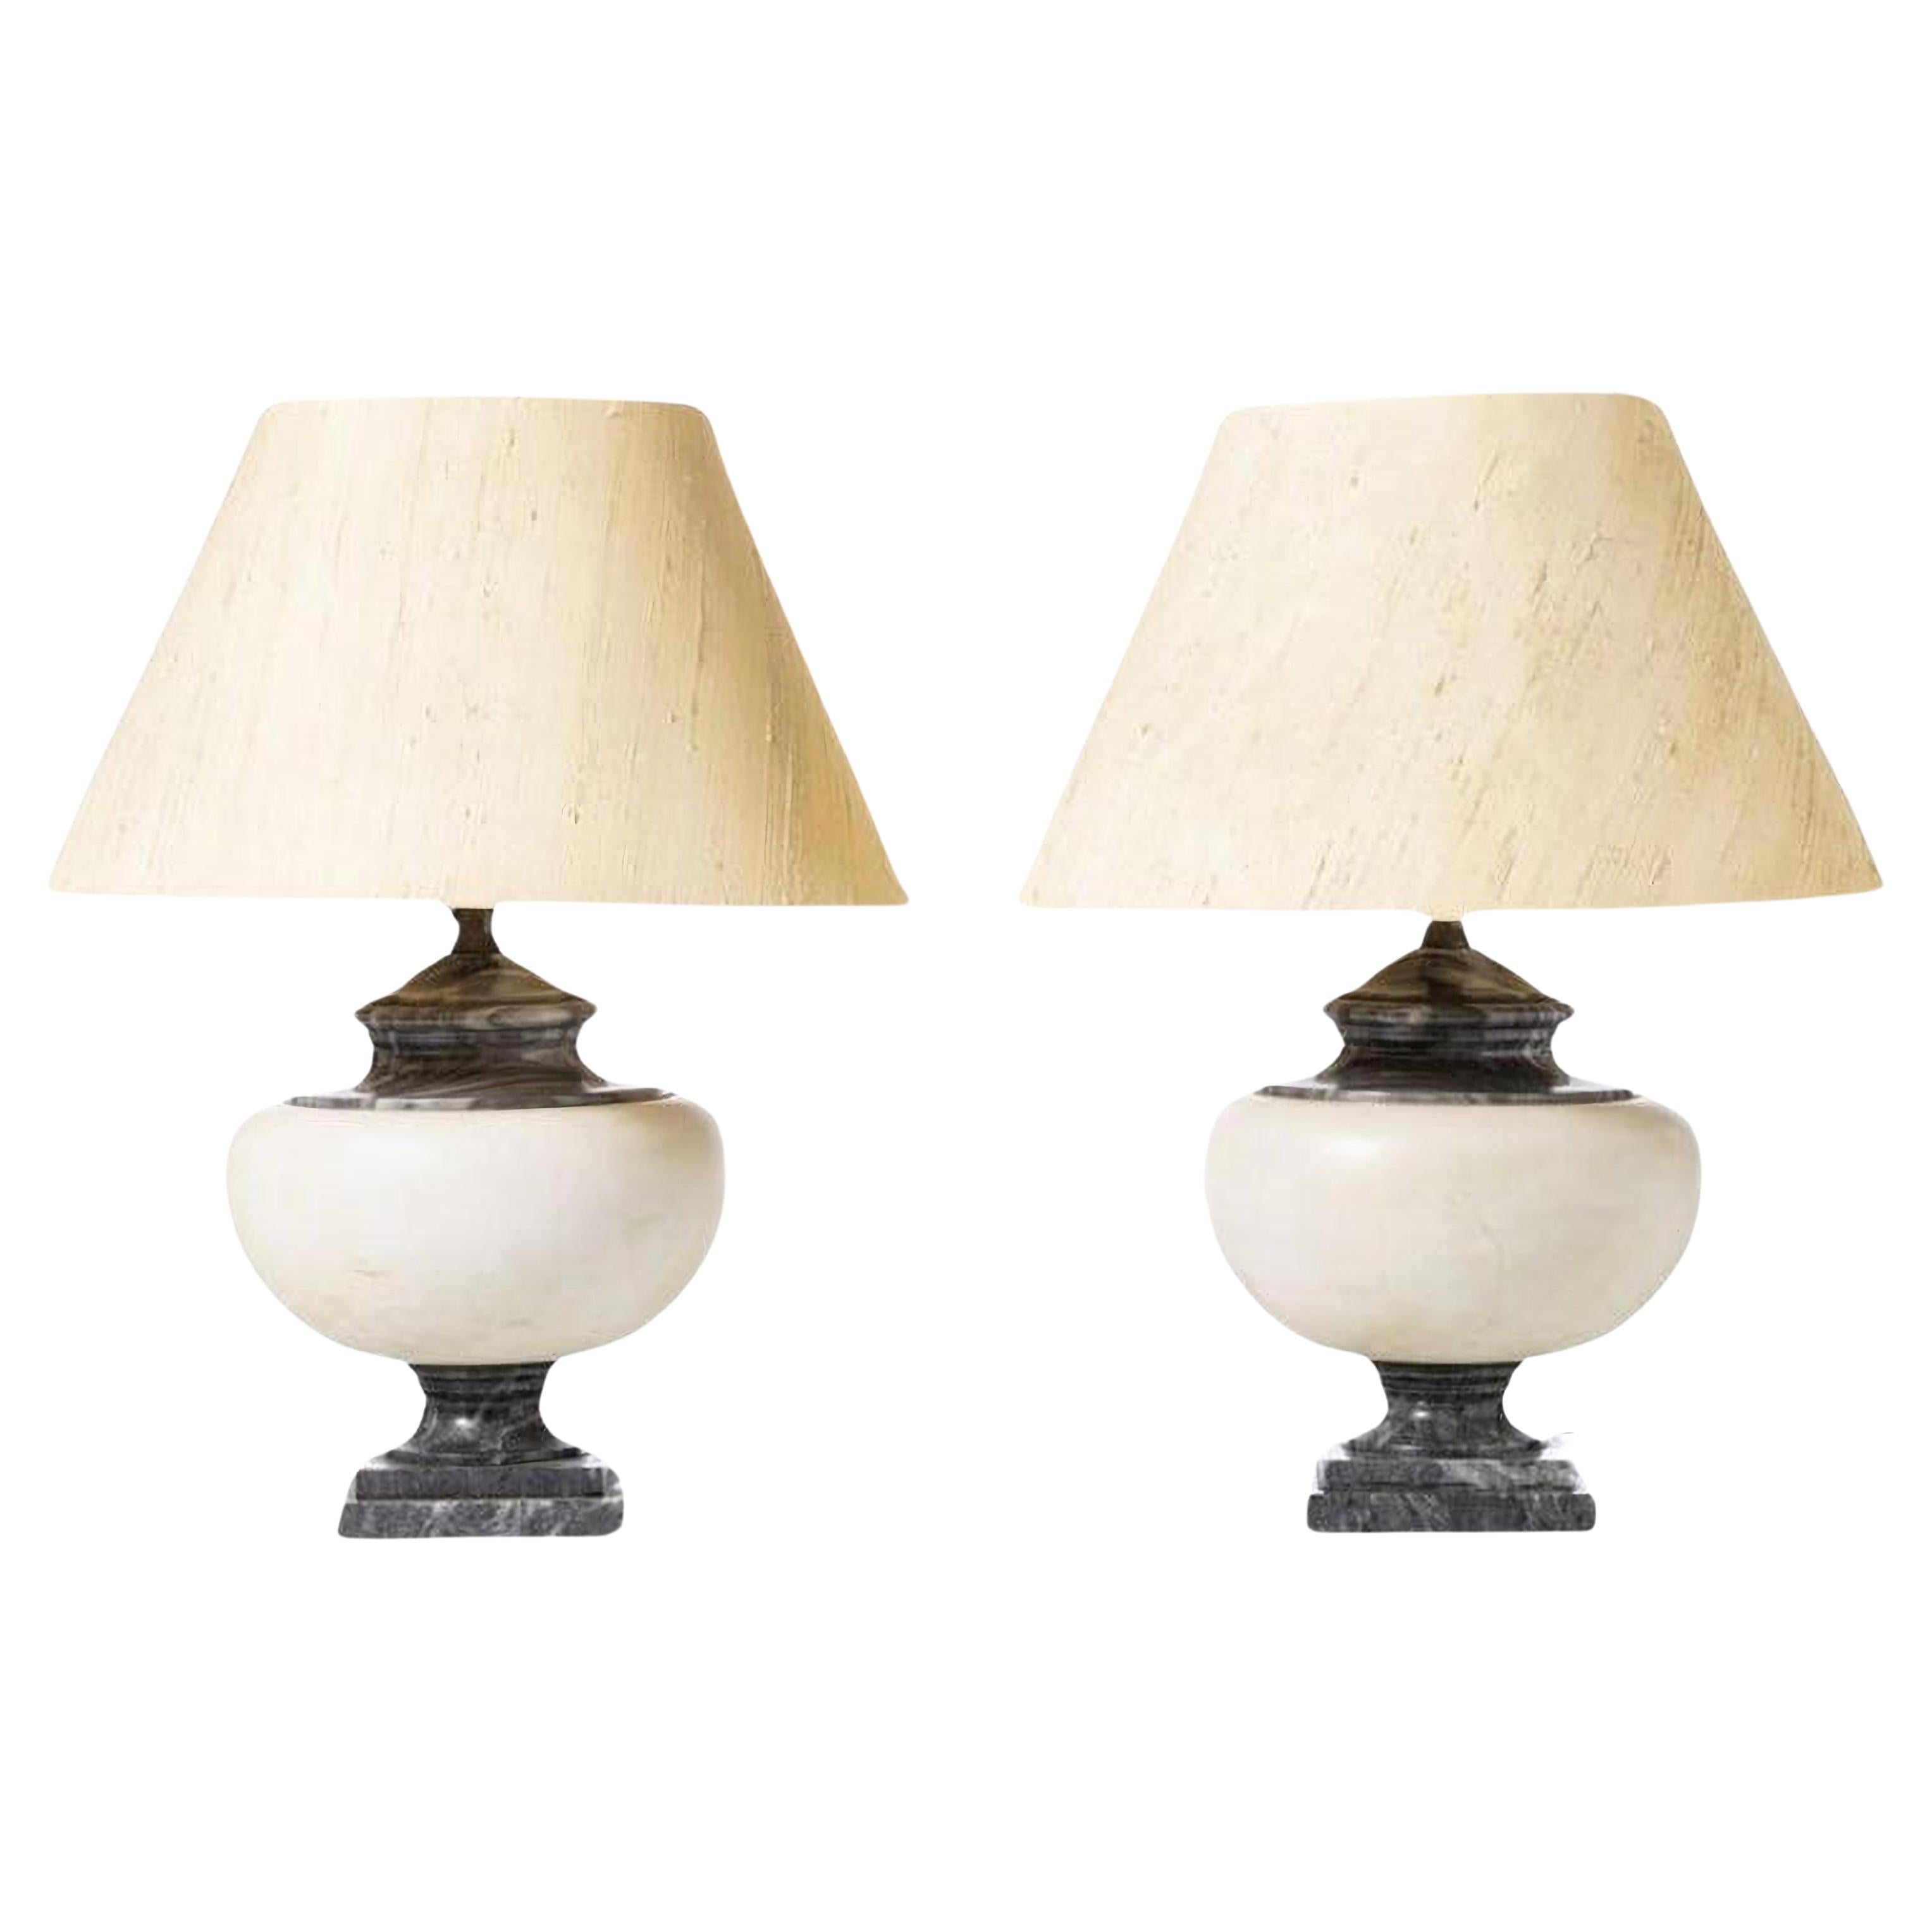 Pair of Art Deco Early 20th Century Italian Lamps